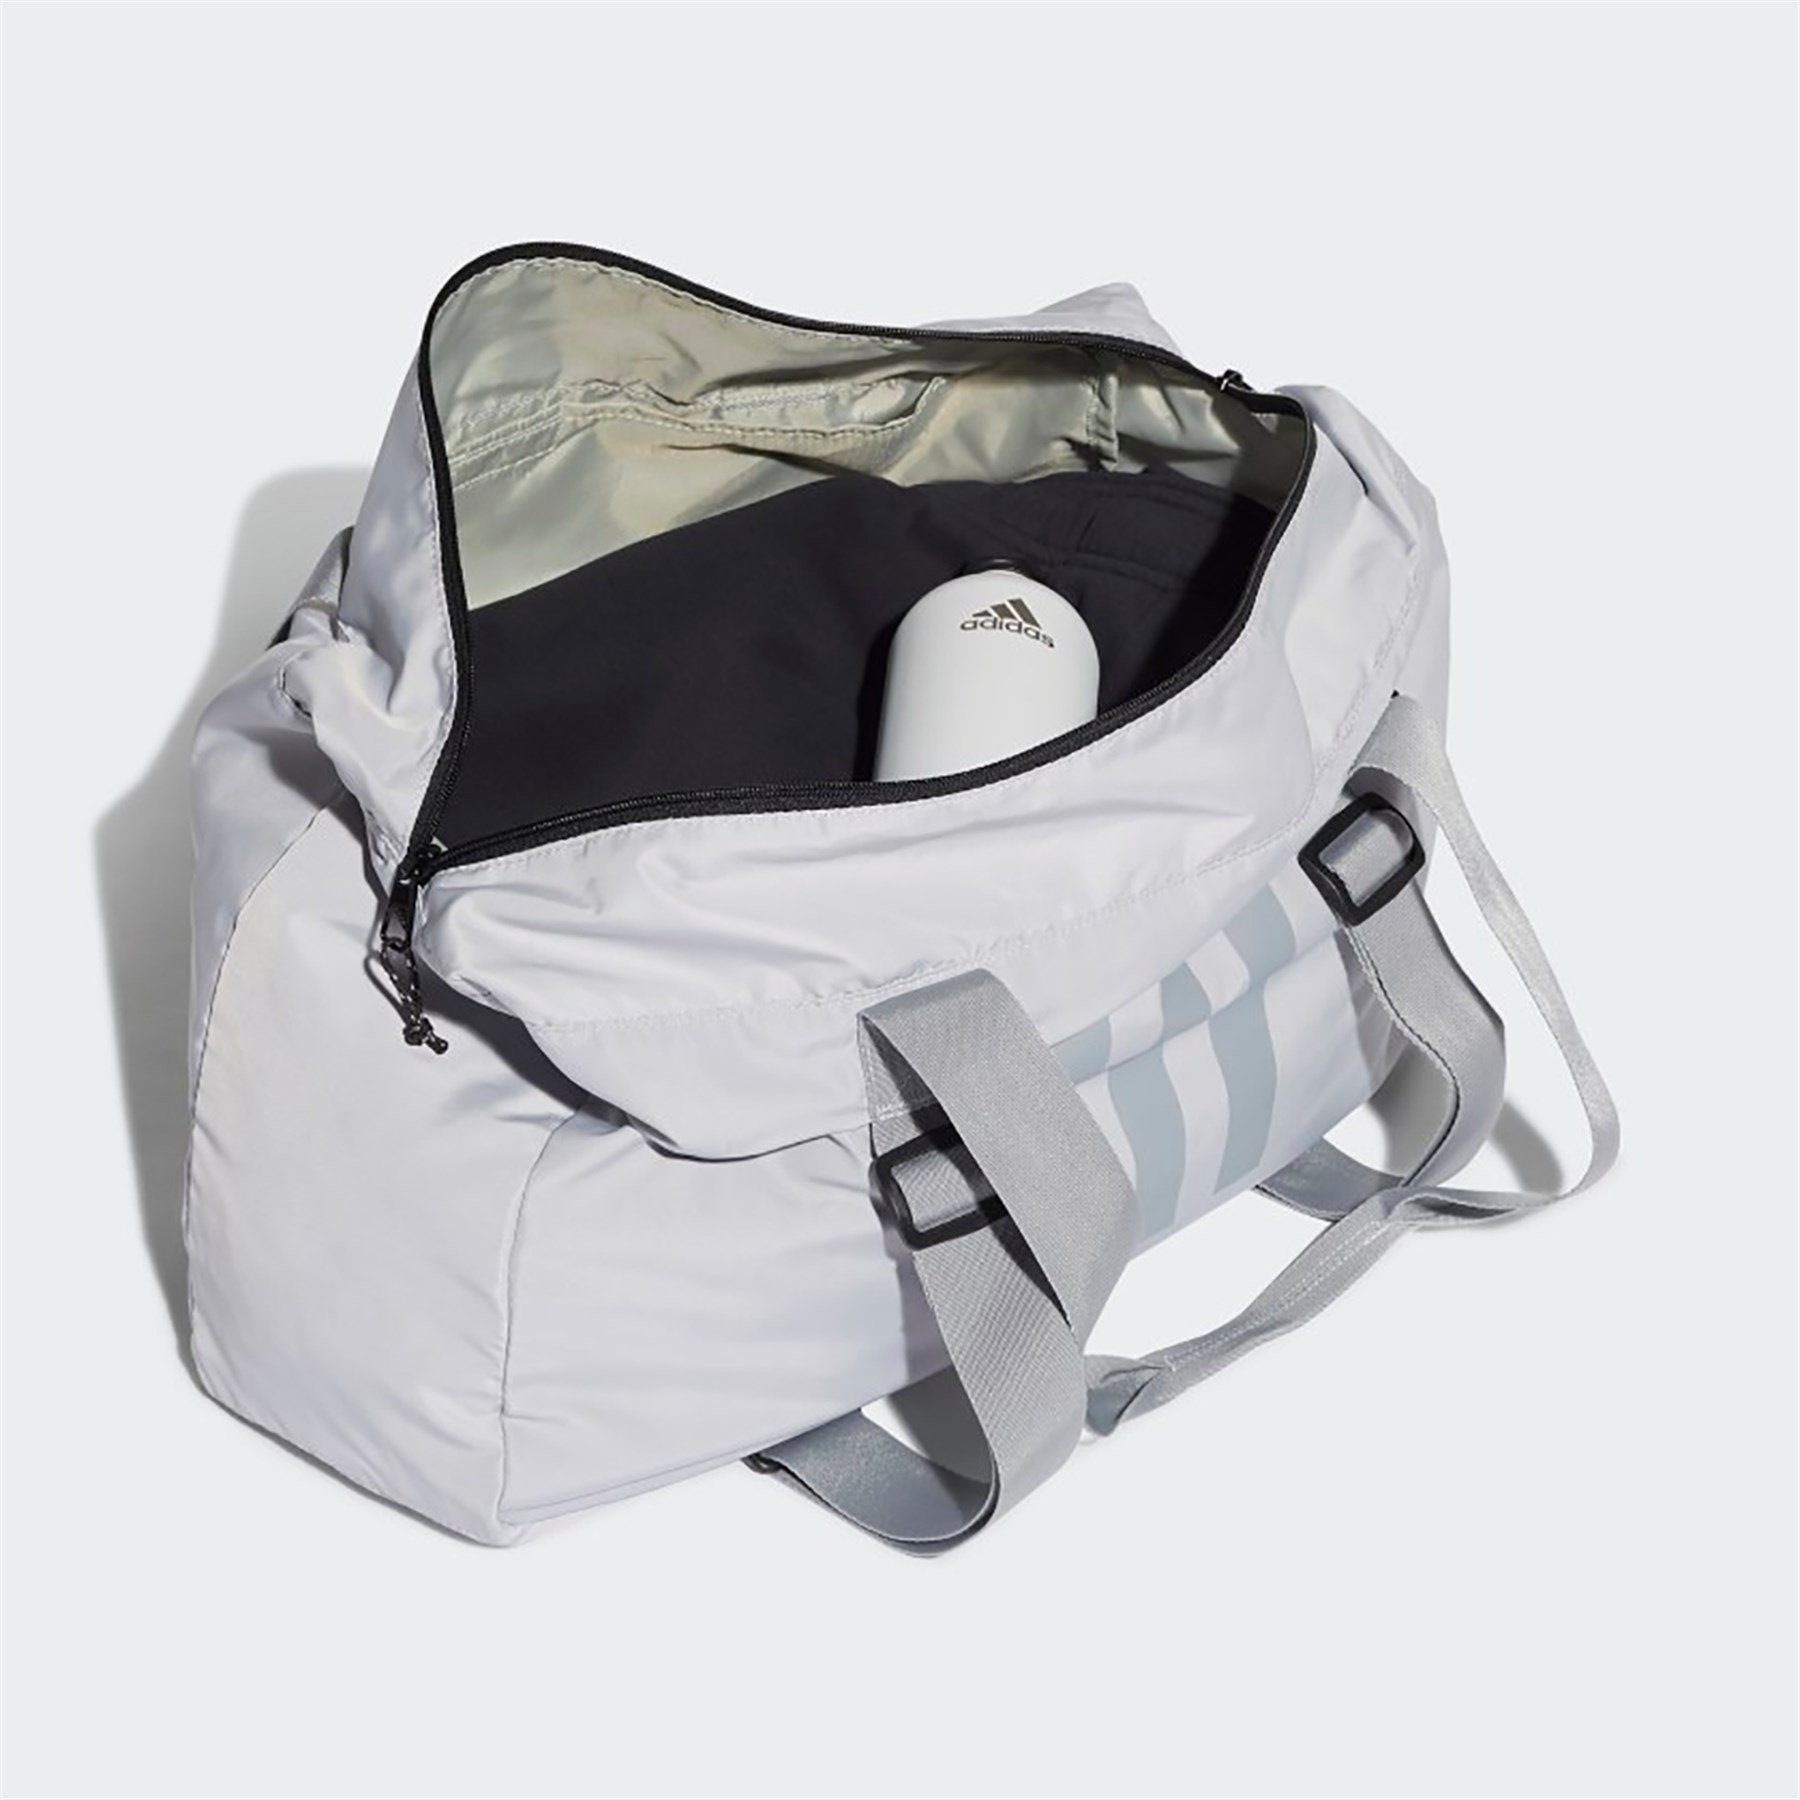 Carry adidas Originals Sporttasche Bag vom Adidas T4H